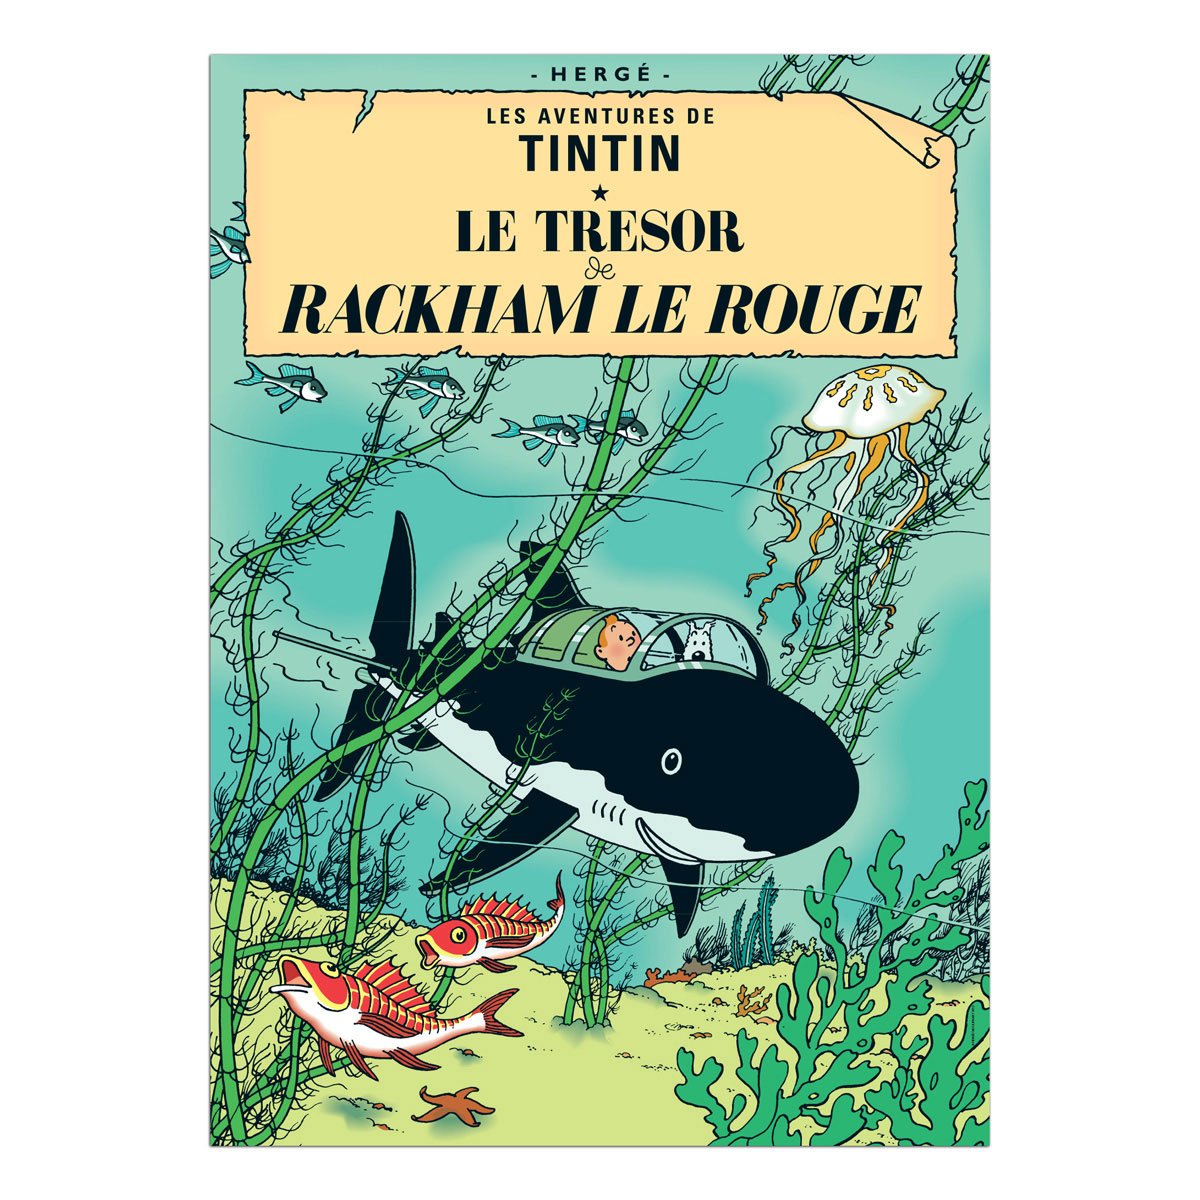 Tintin book postcards Rackham